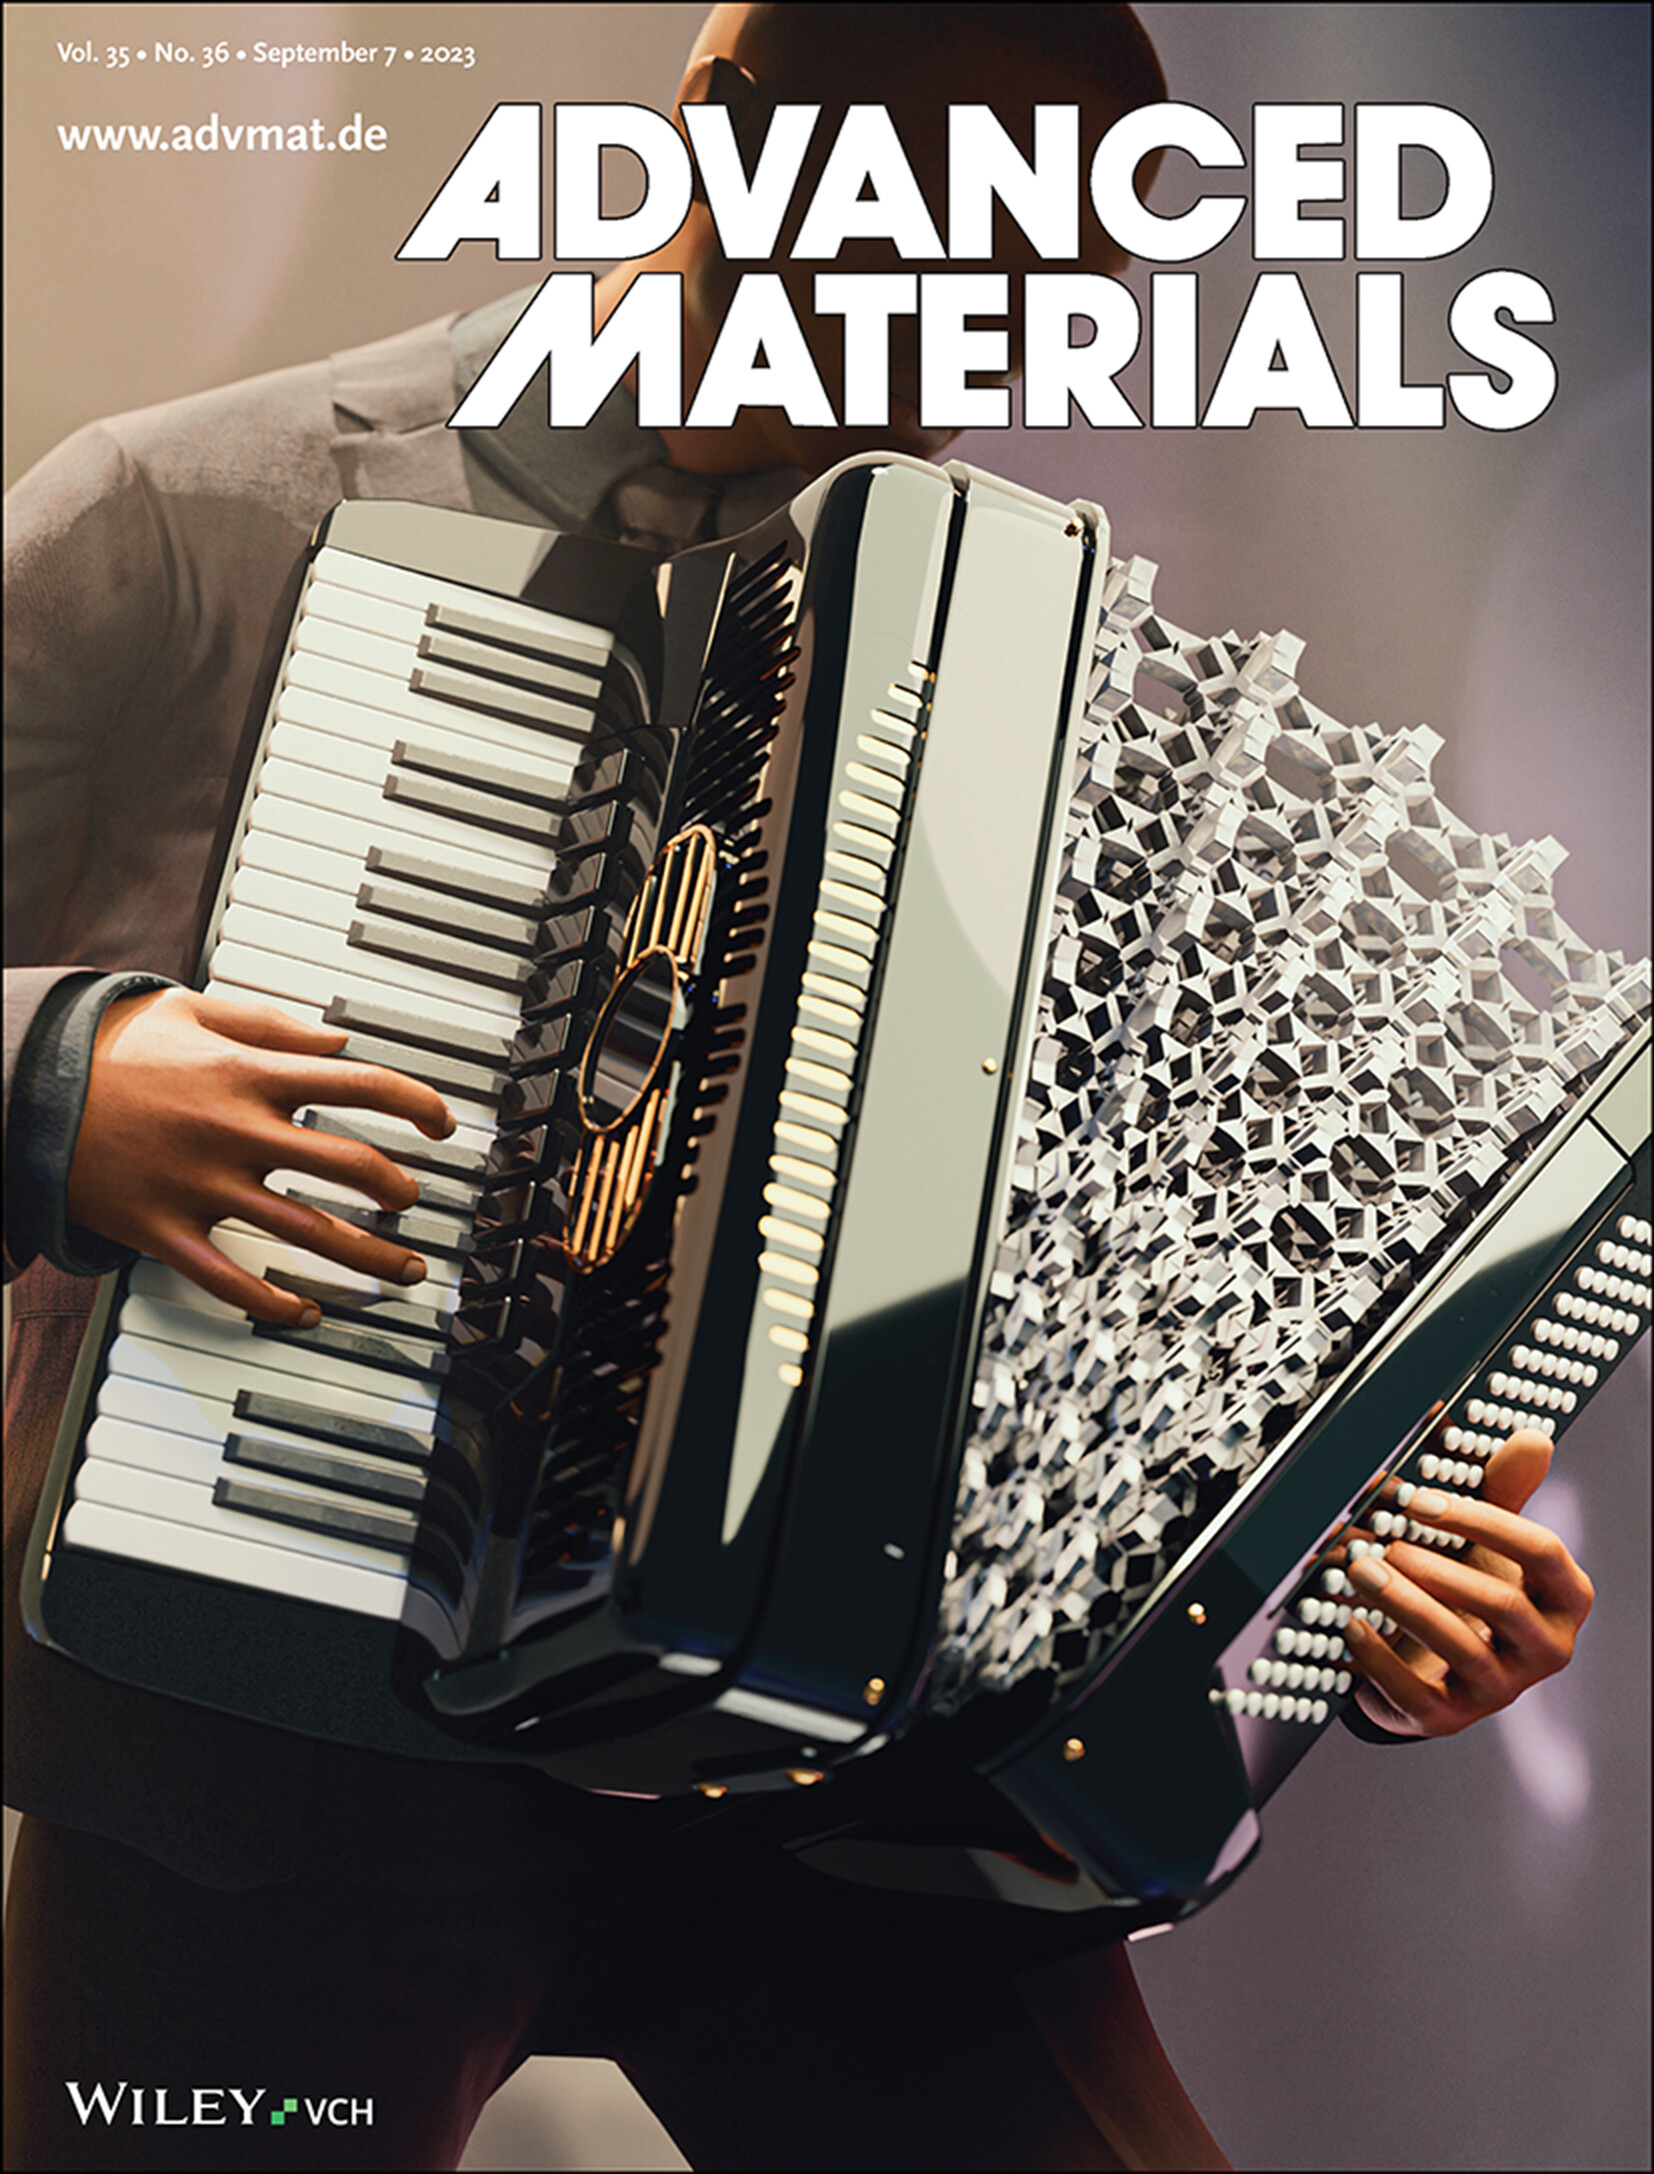 A metamaterial accordion!